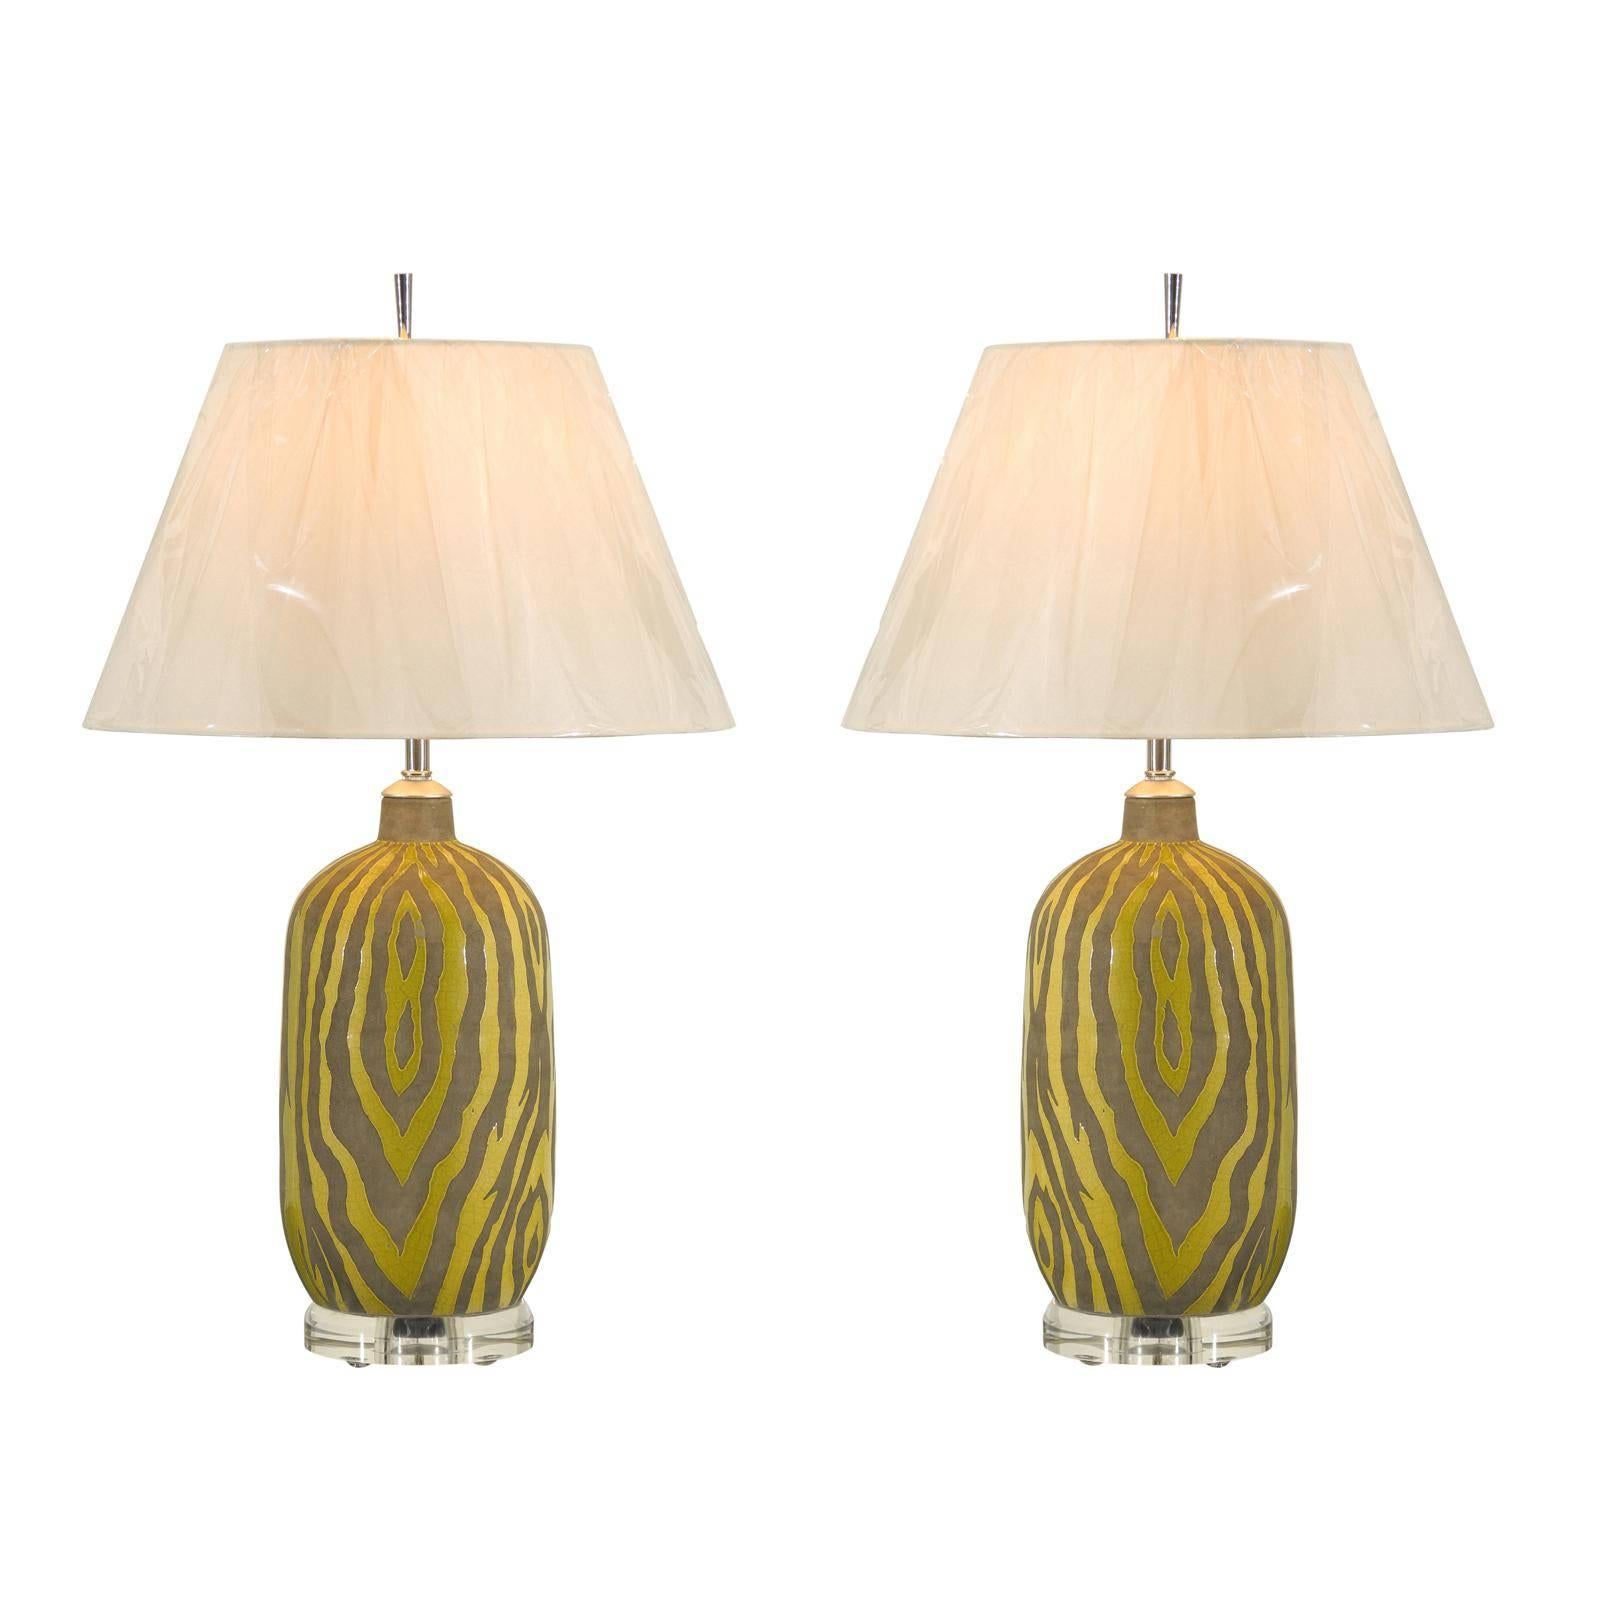 Striking Restored Pair of Vintage Zebra Print Ceramic Lamps in Citrus For Sale